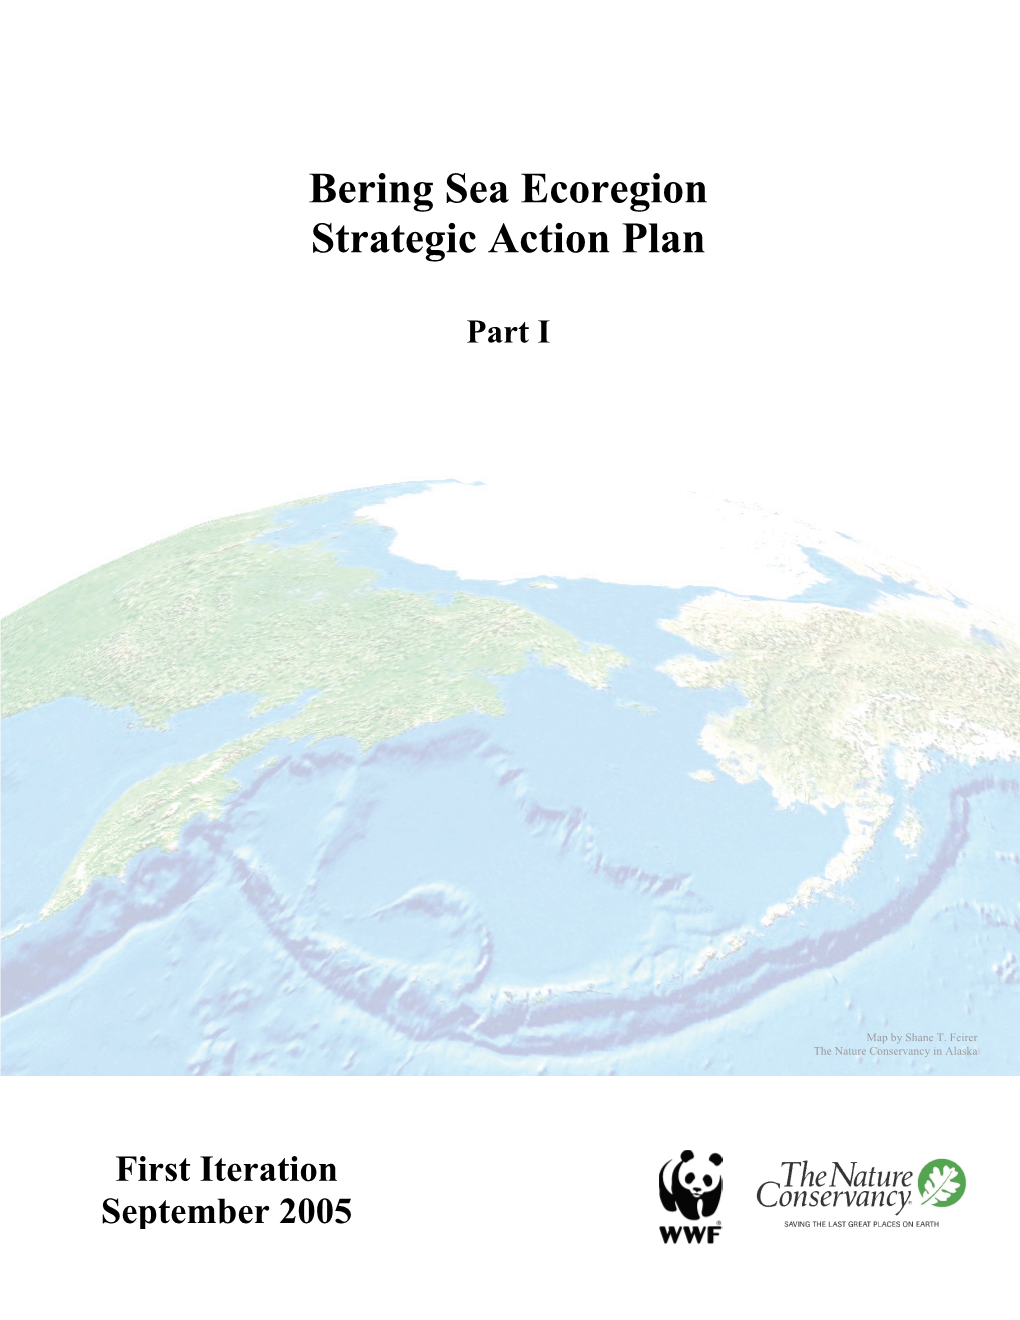 Bering Sea Ecoregion Strategic Action Plan